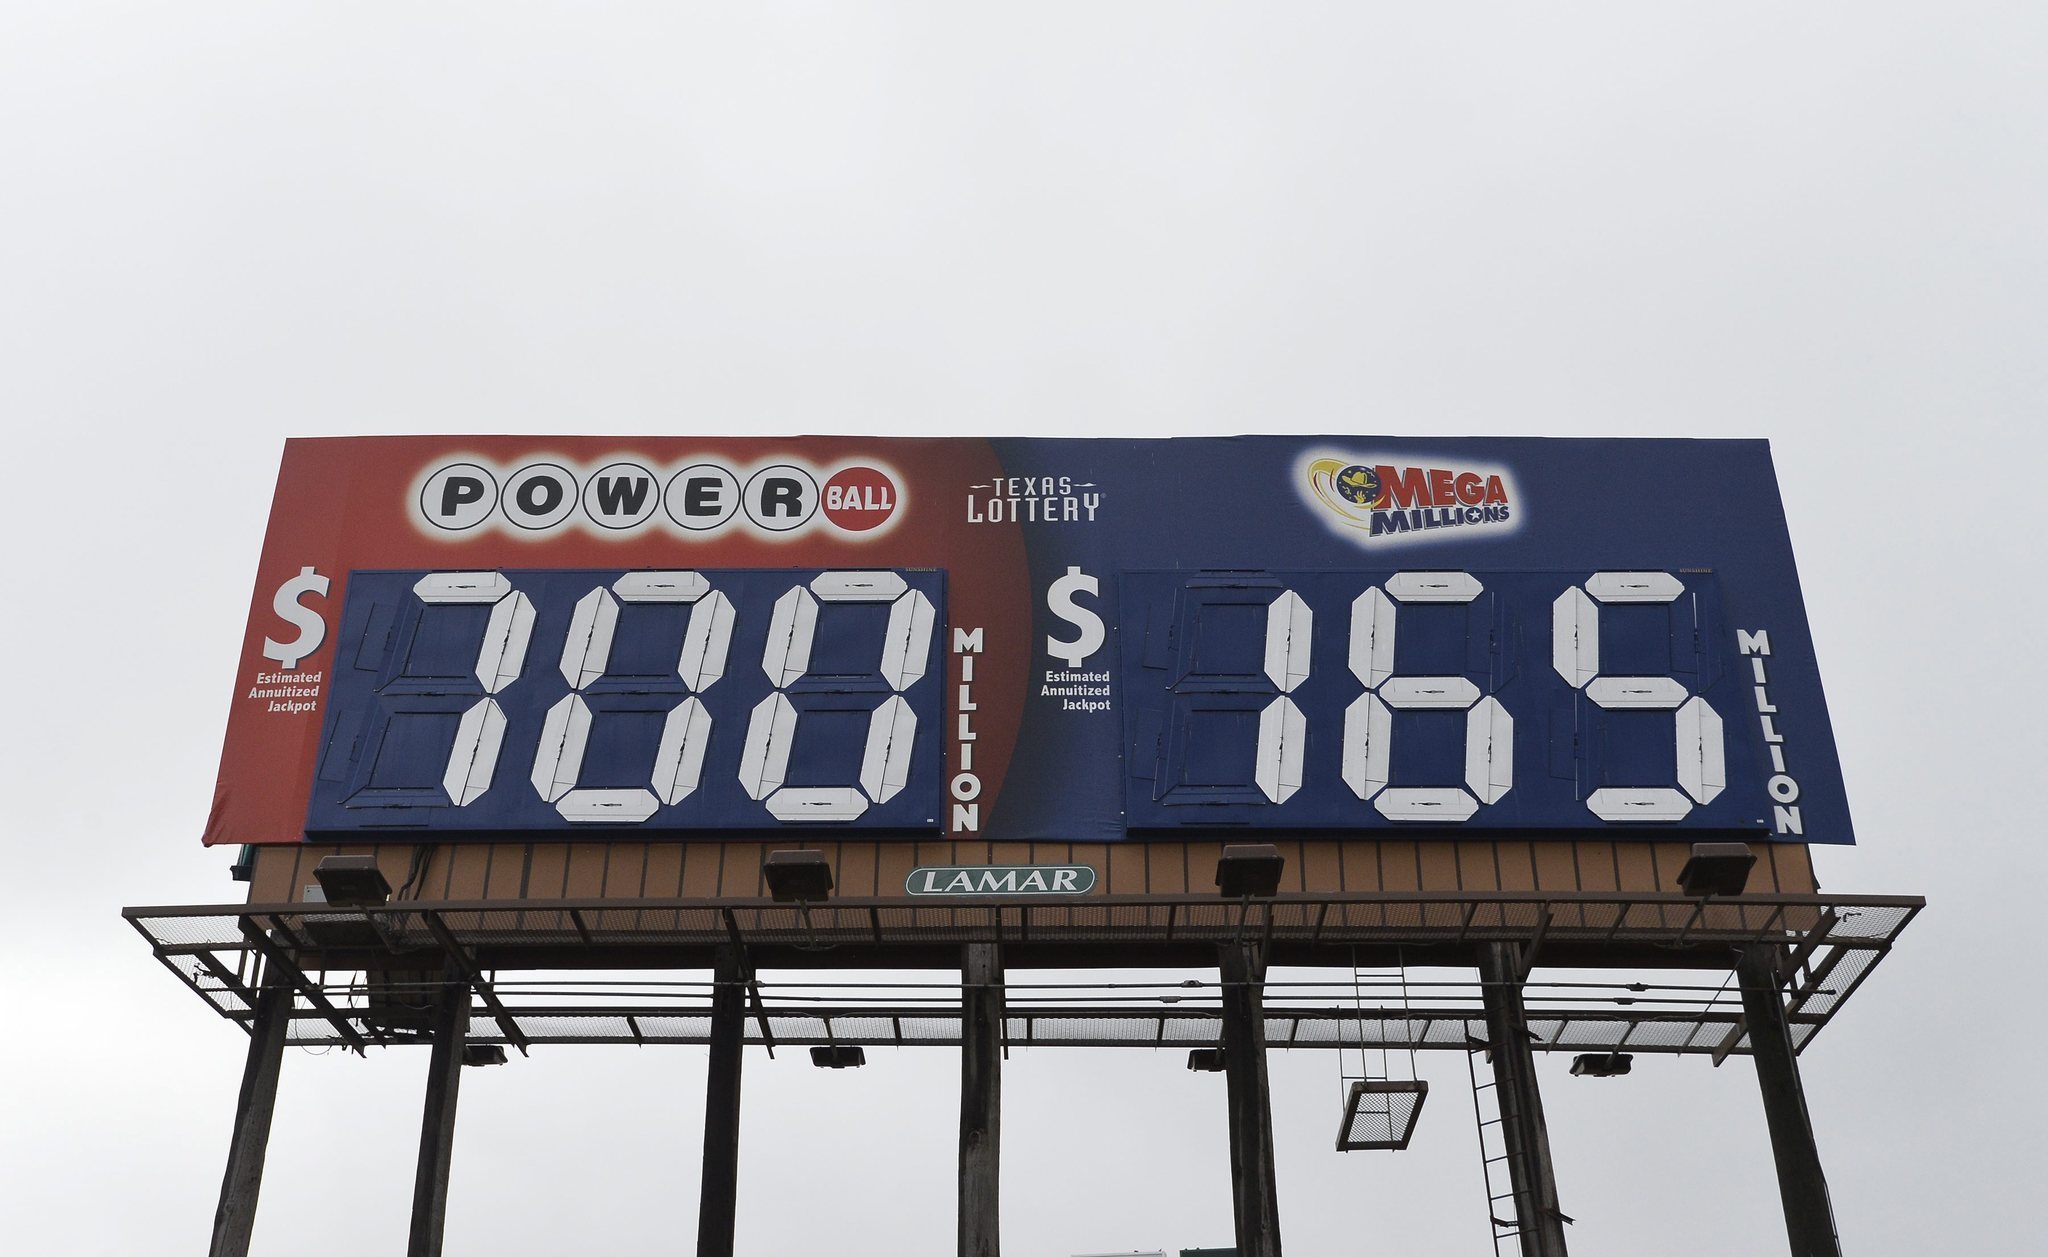 Powerball jackpot climbs to record $700 million - Chicago Tribune2048 x 1257